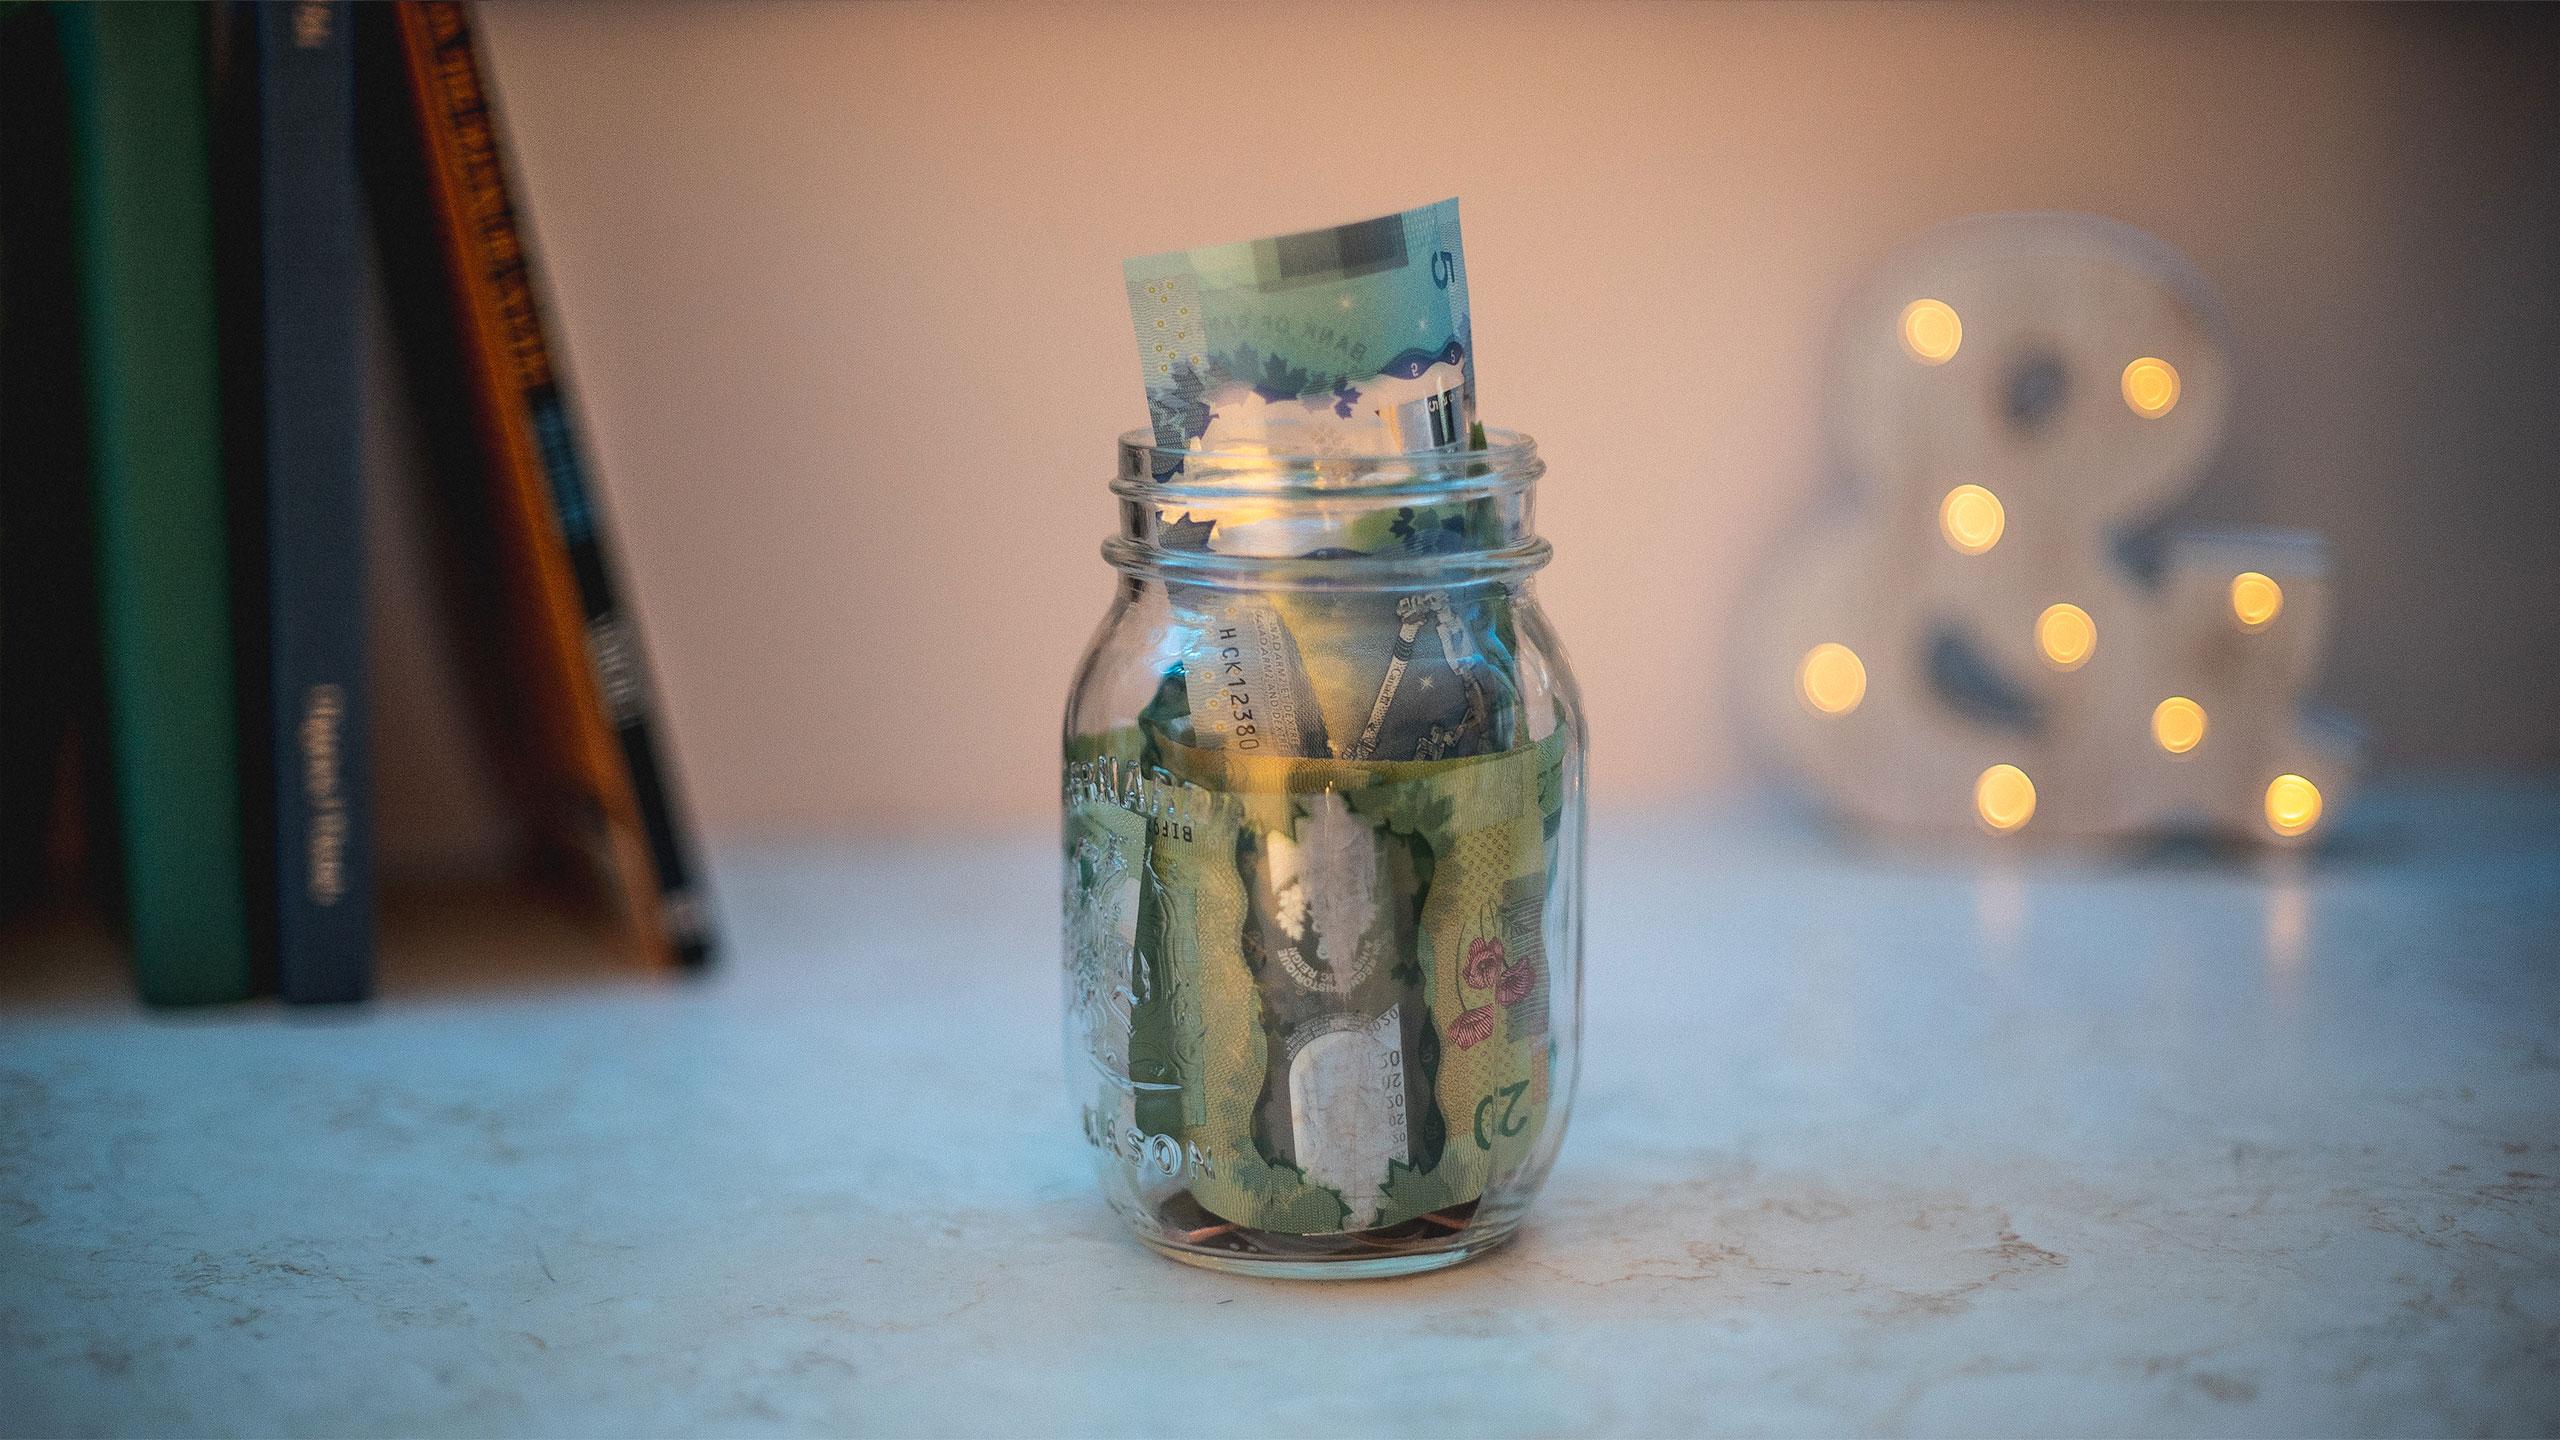 A savings jar brimming with $20 and $5 bills